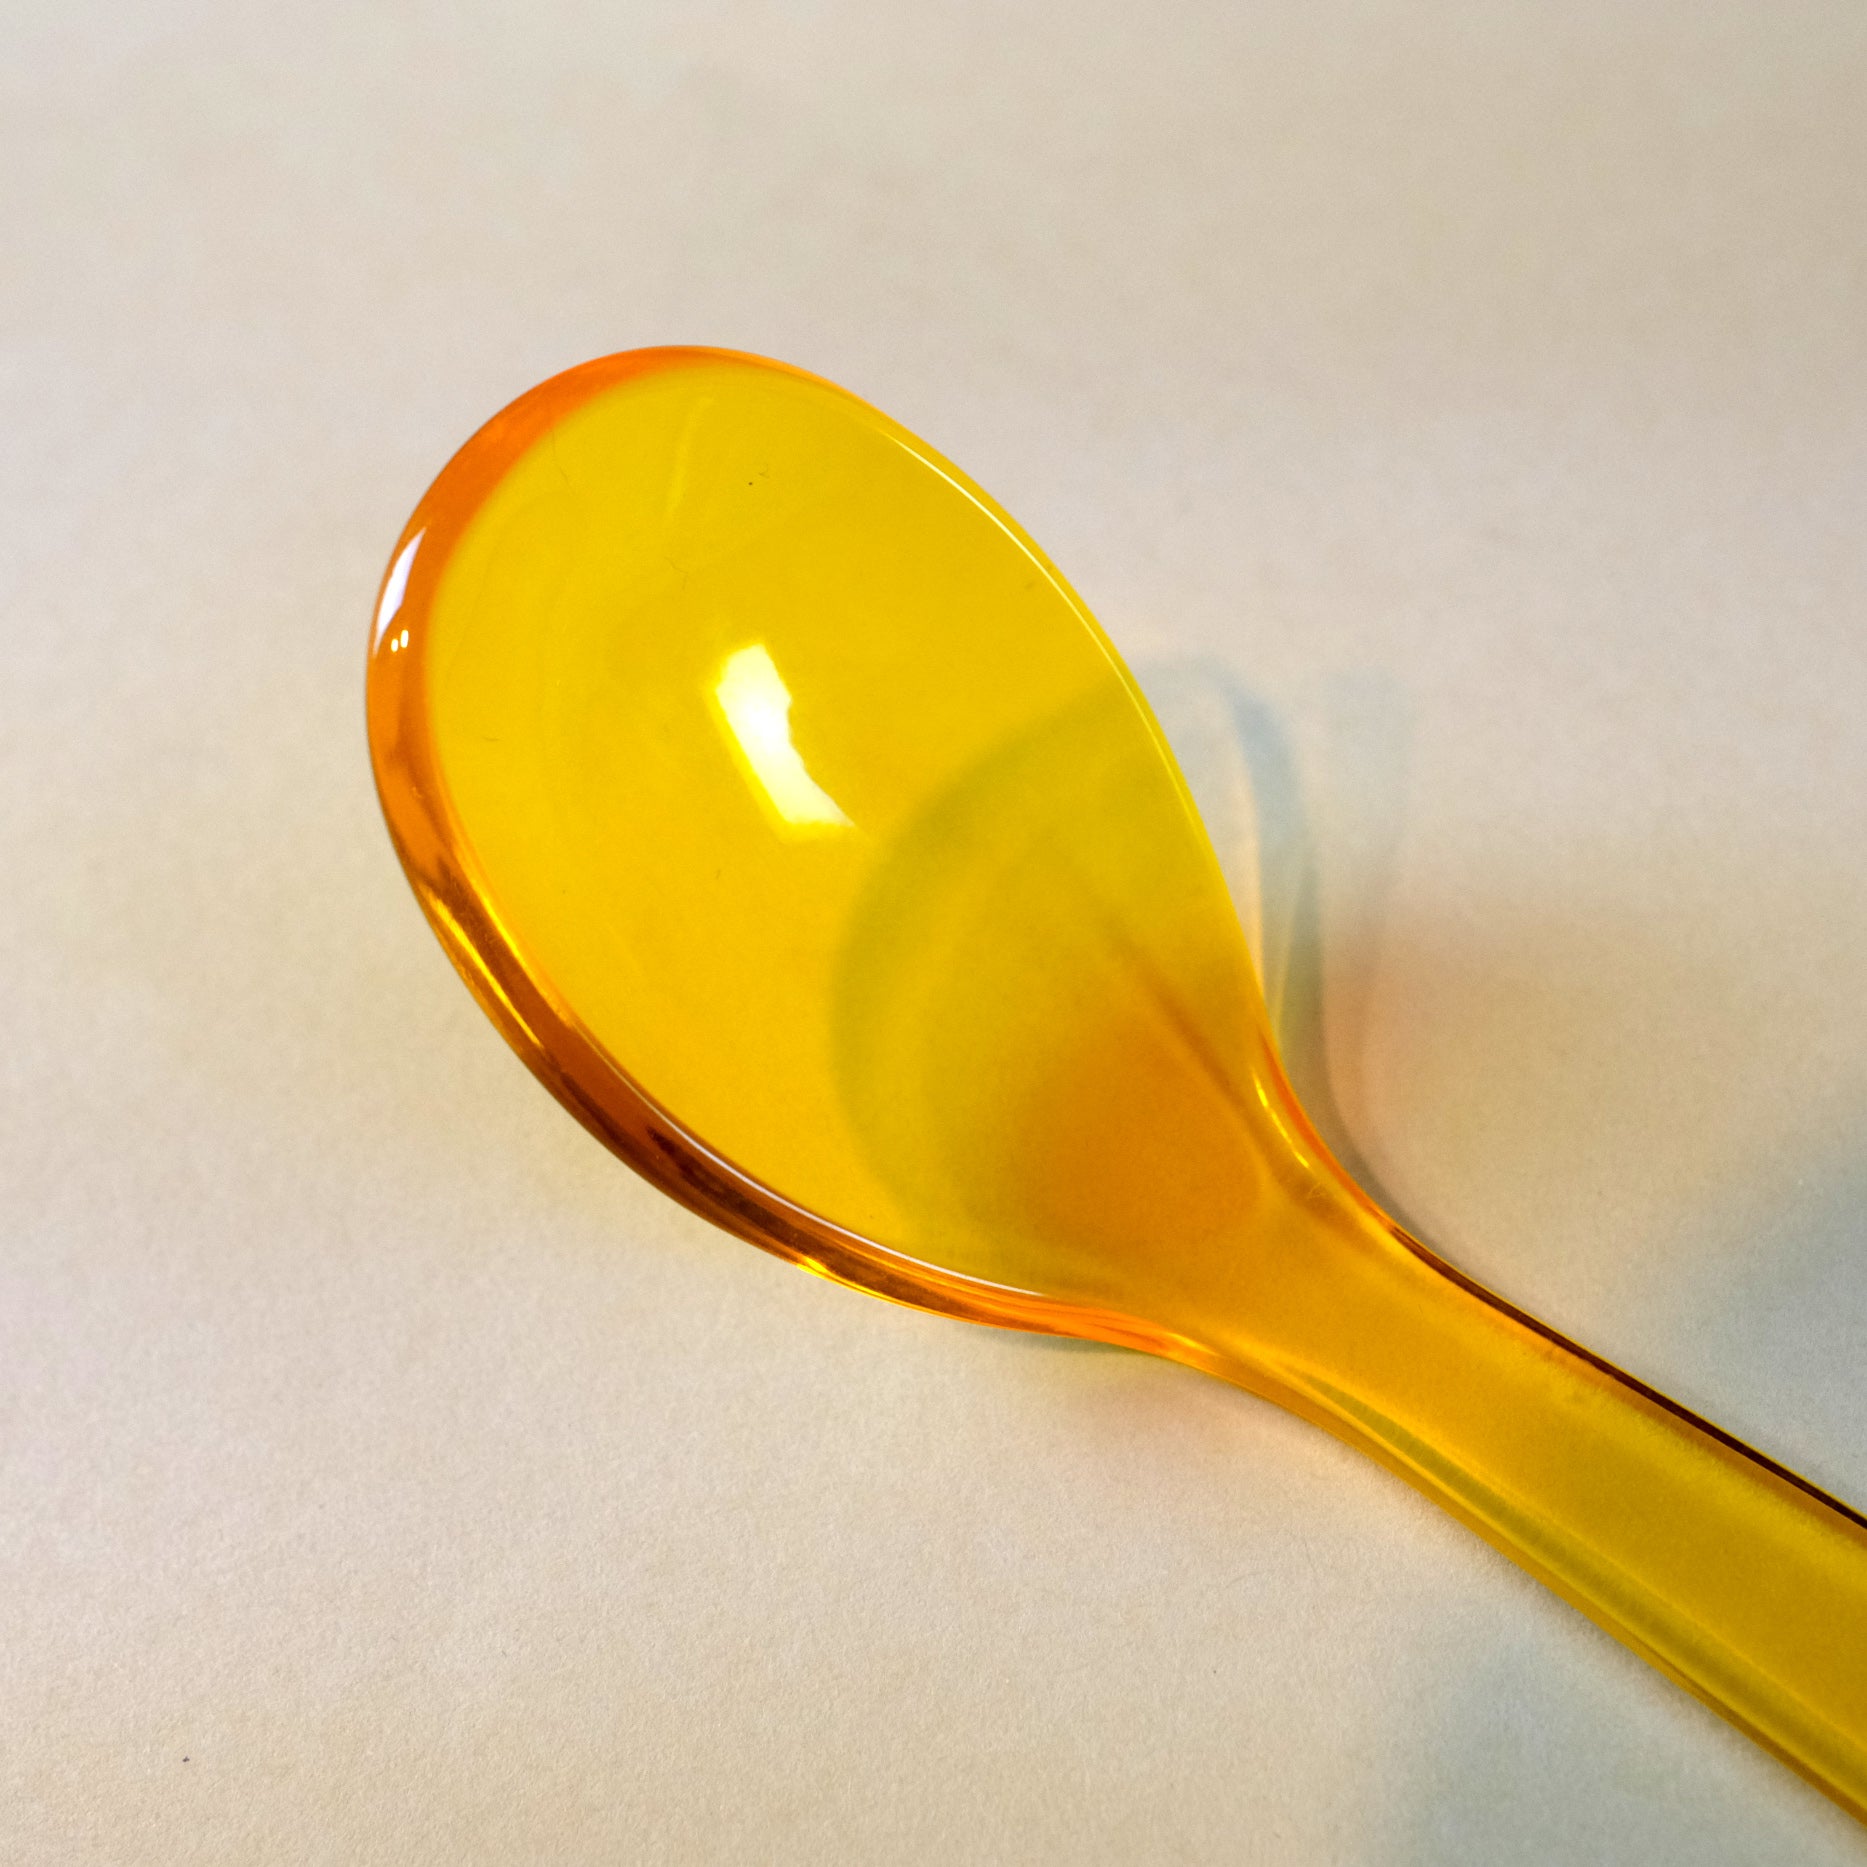 Jelly spoon